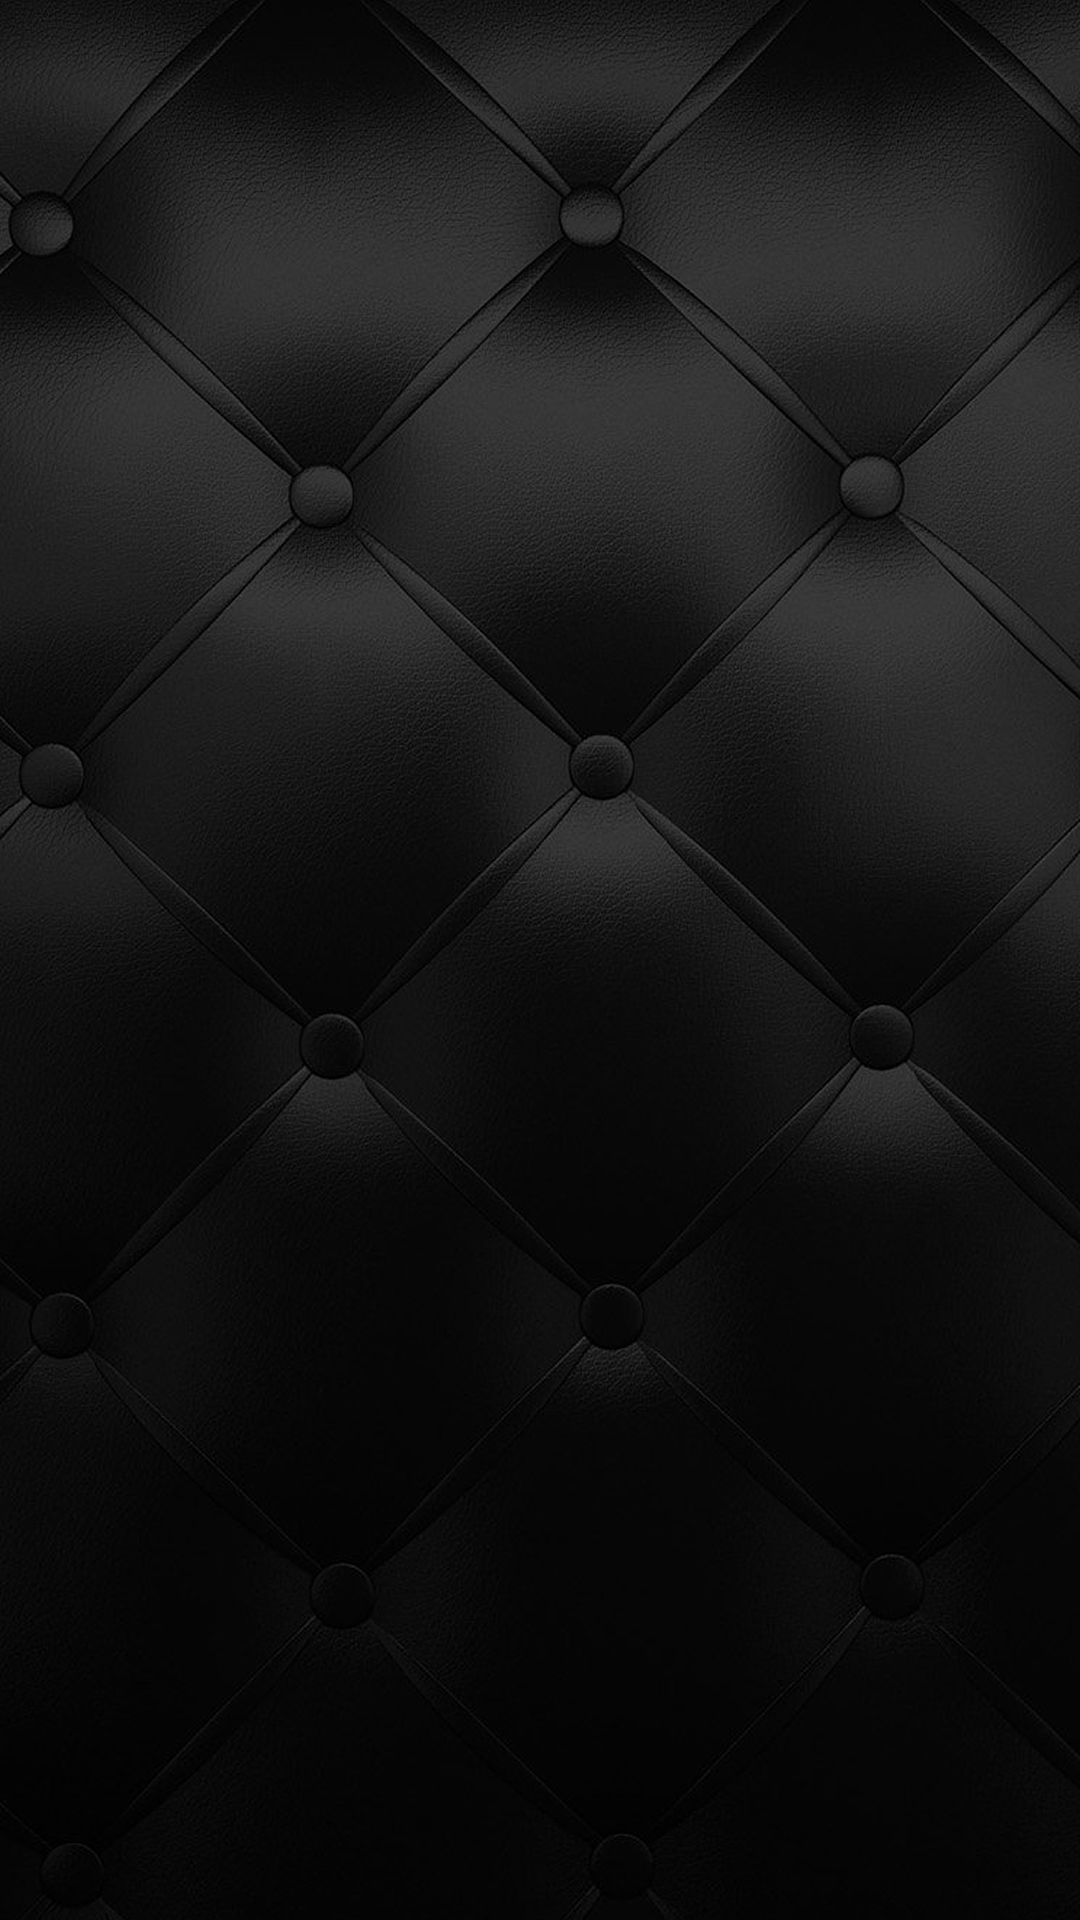 Black Wallpaper For IPhone Group Wallpaper House.com